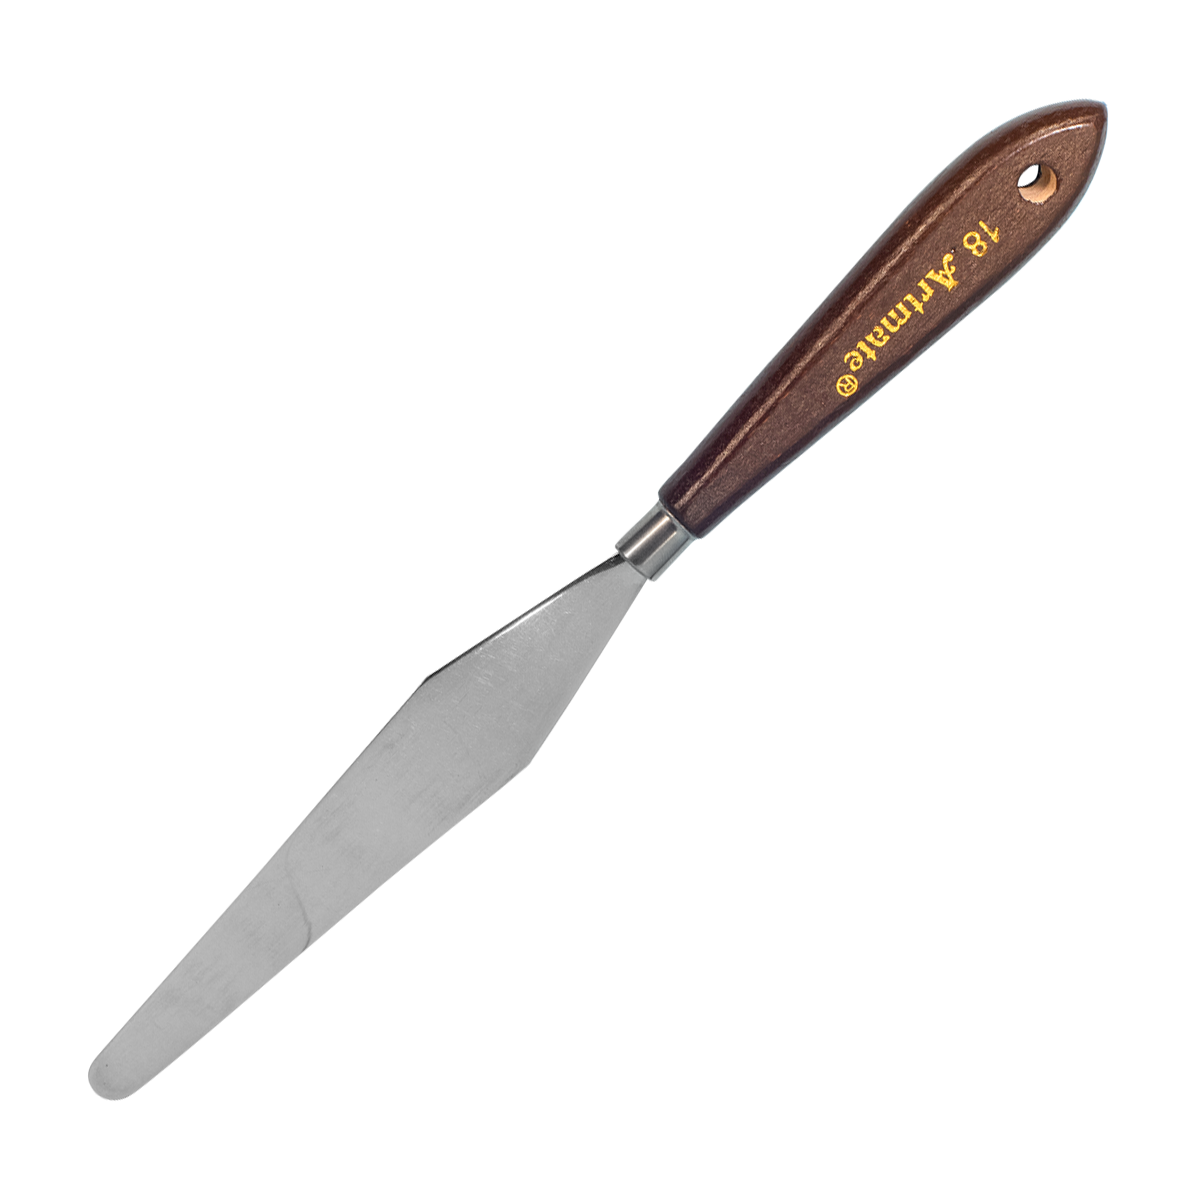 ARTMATE Palette Knife No. 18